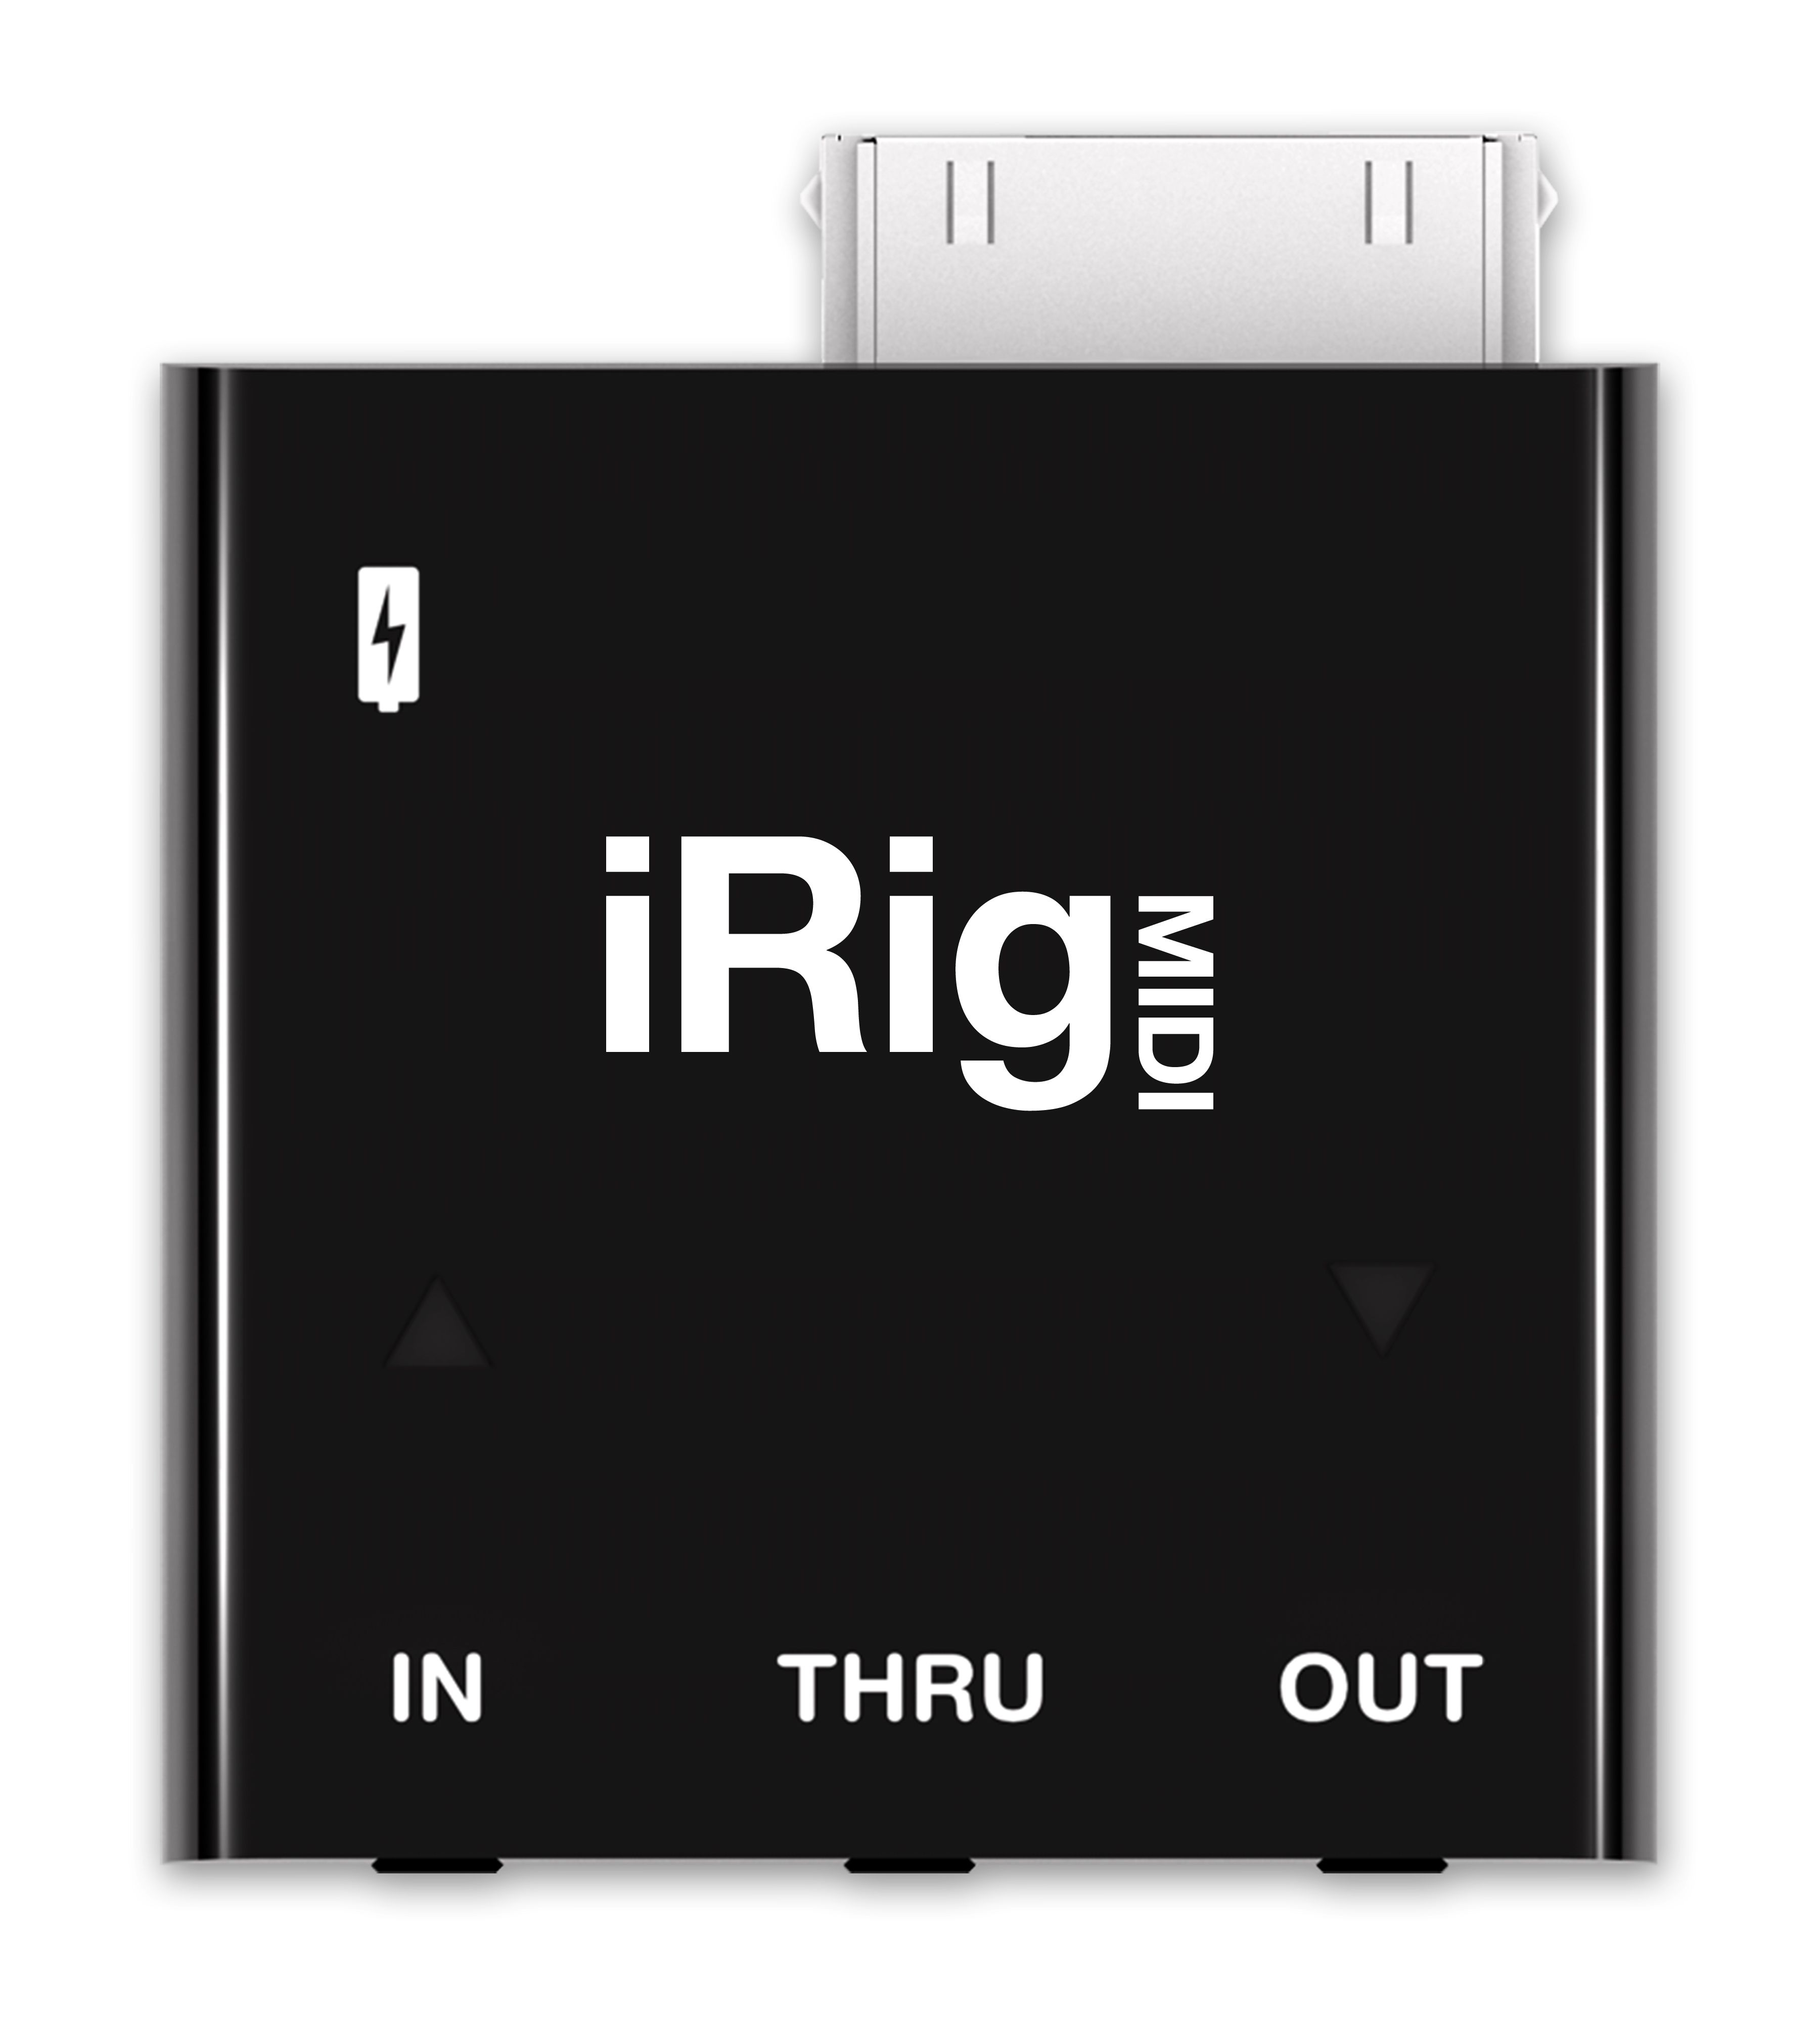 The main iRig MIDI unit